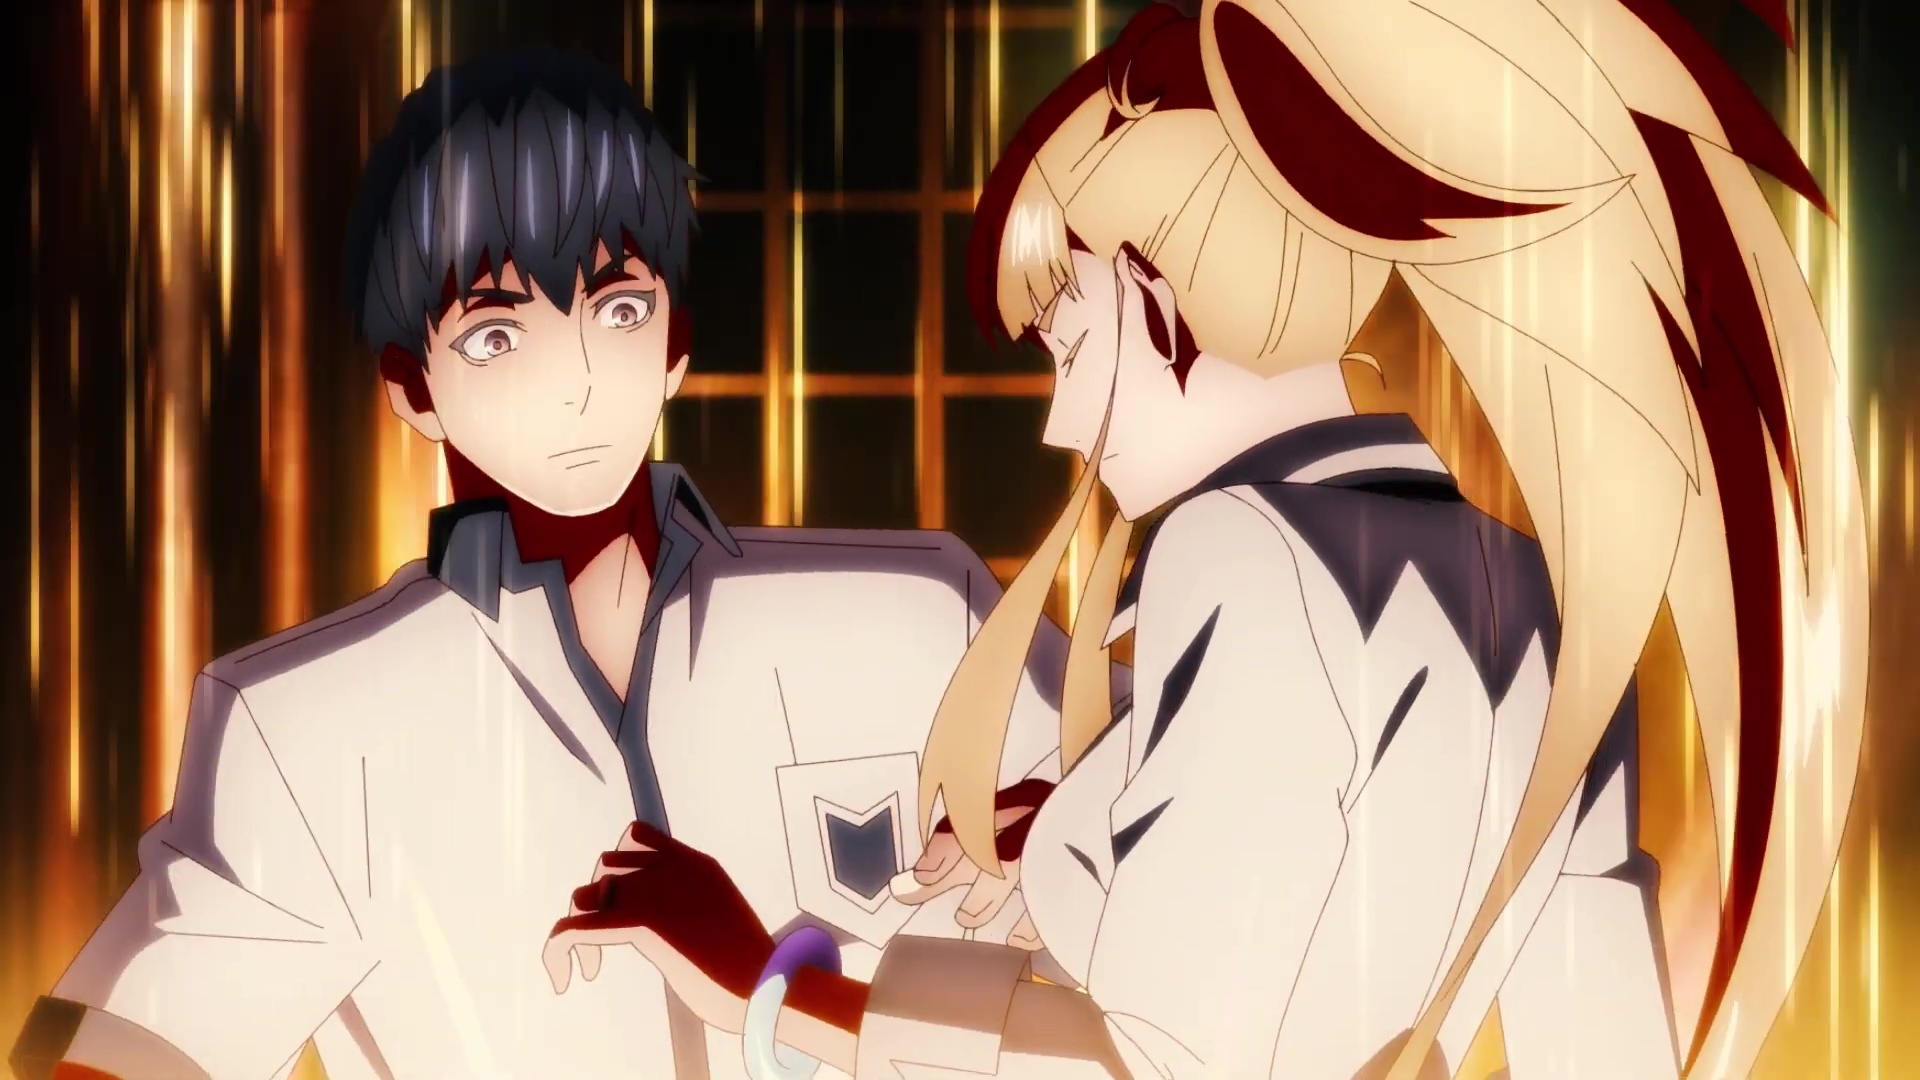 Kekkon Yubiwa: Anime de Romance Ganha Trailers de Personagens